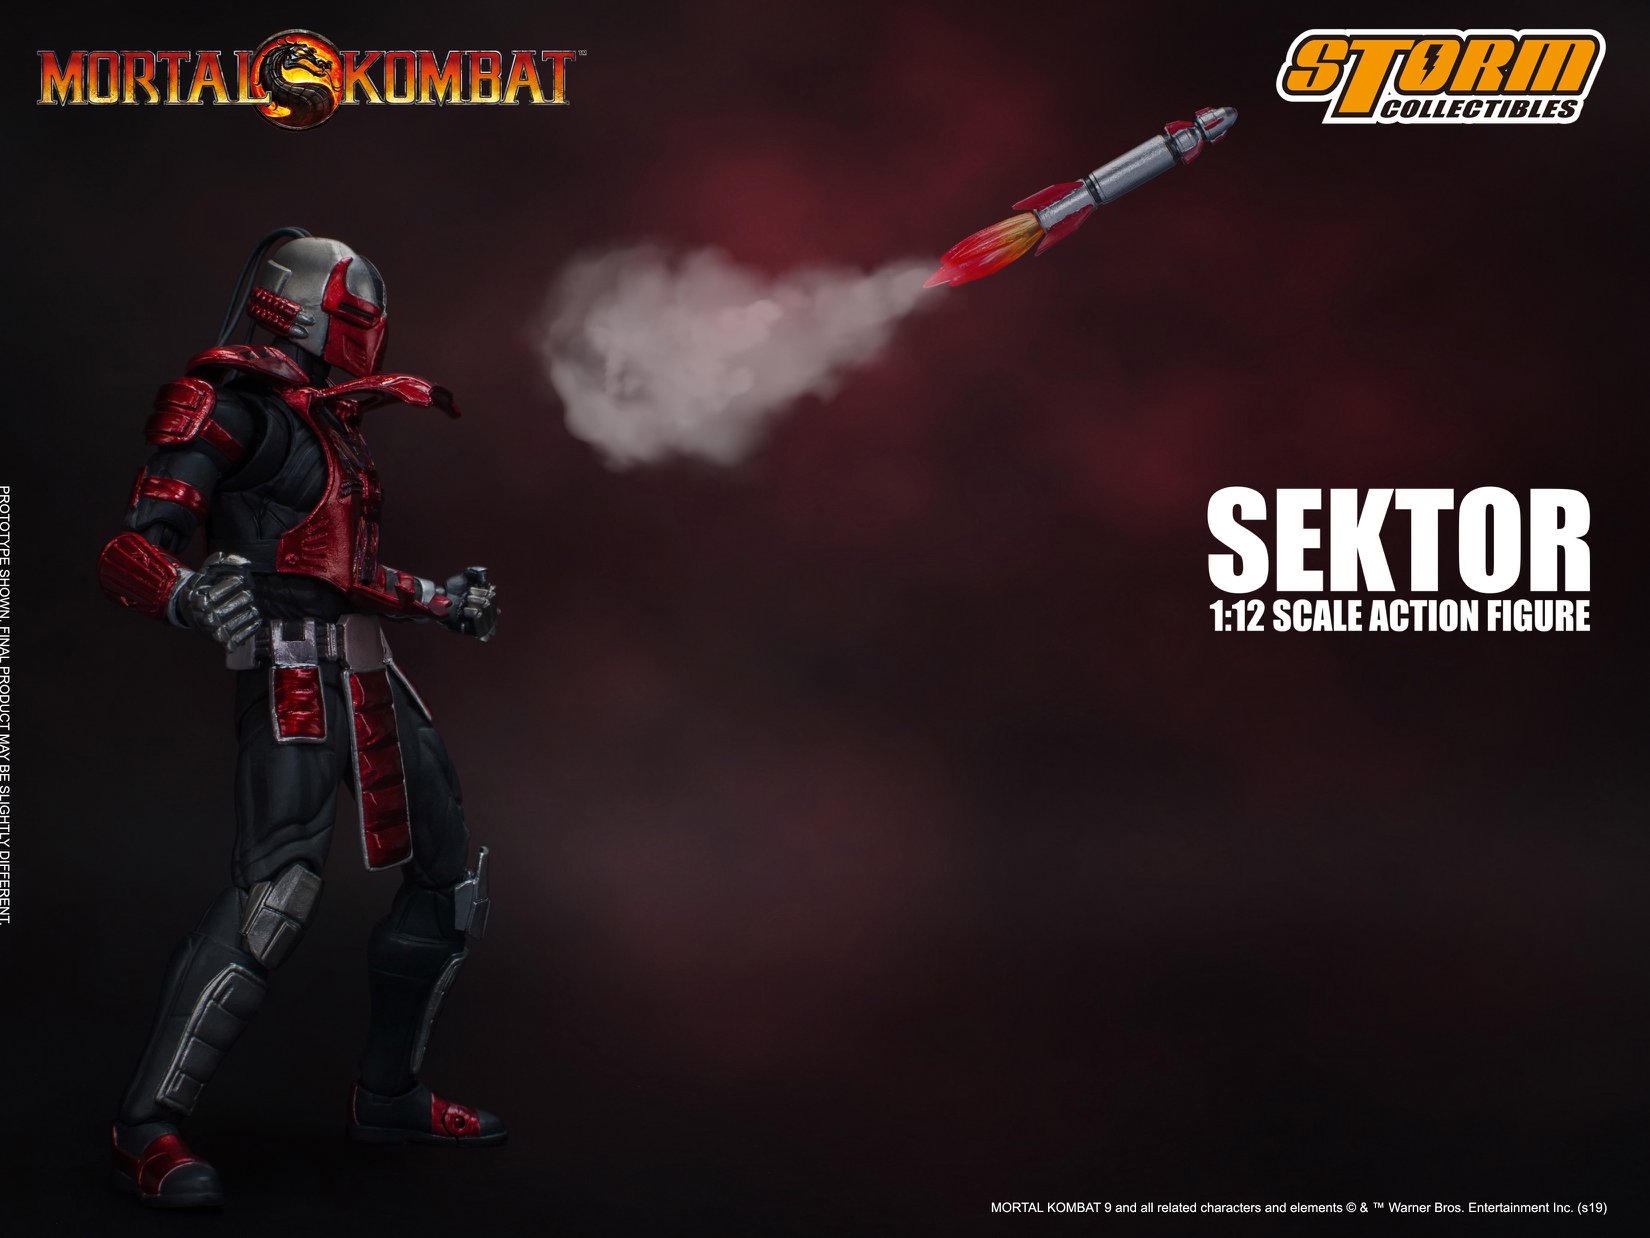 Mortal Kombat's Sektor Storm Collectibles Figure